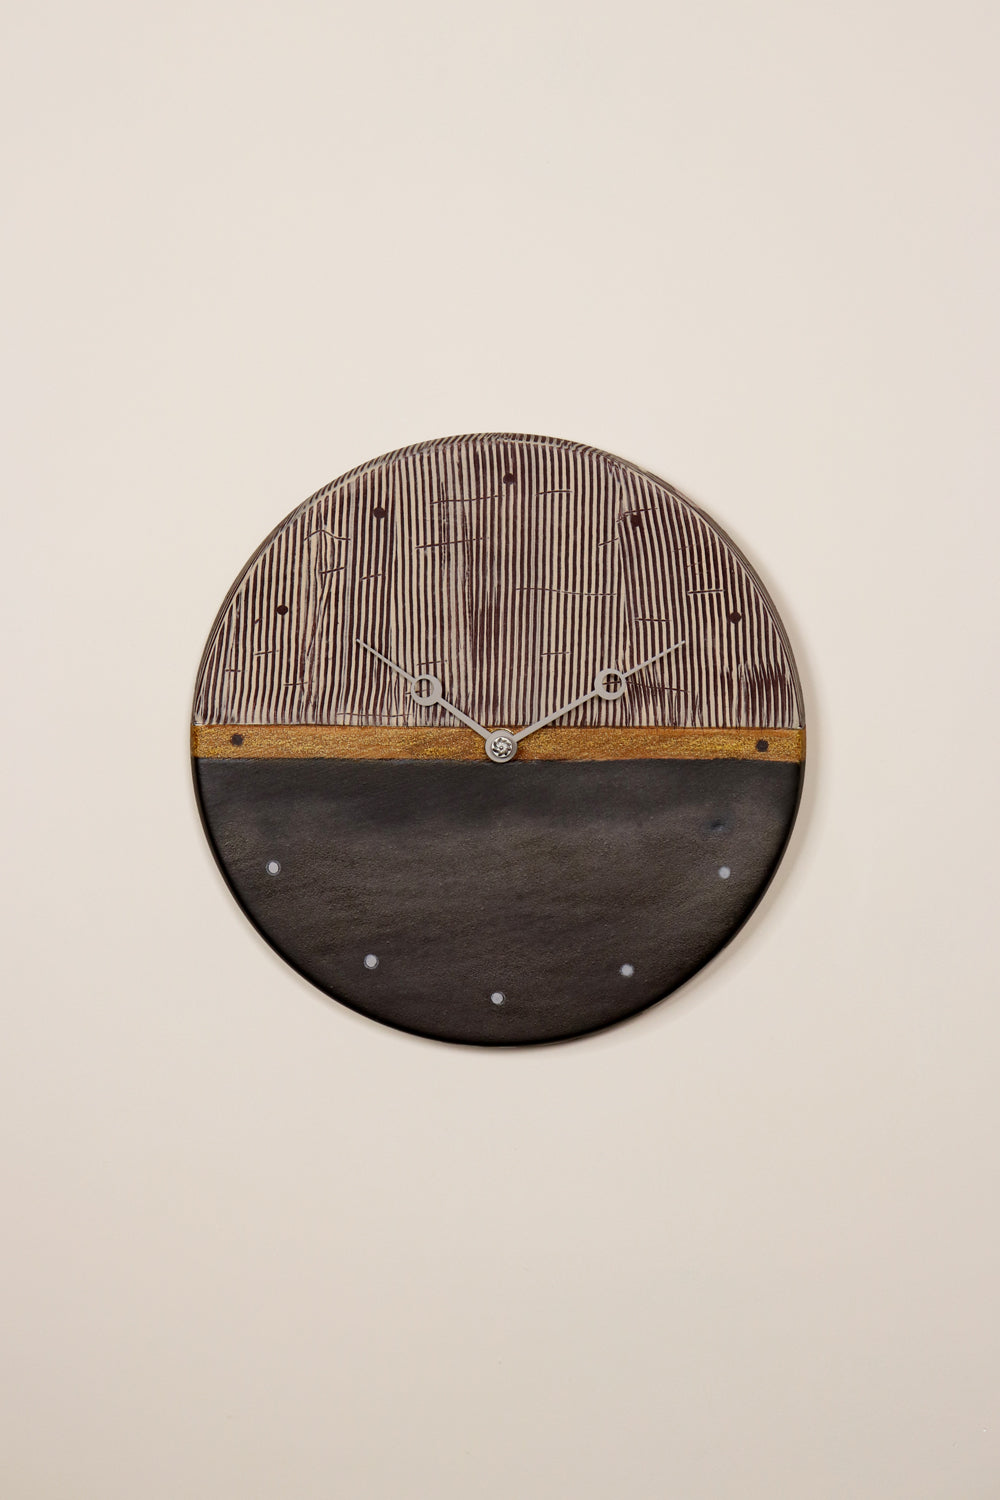 Janna Ugone & Co Clock Ceramic Clock in Mocha and Foundry